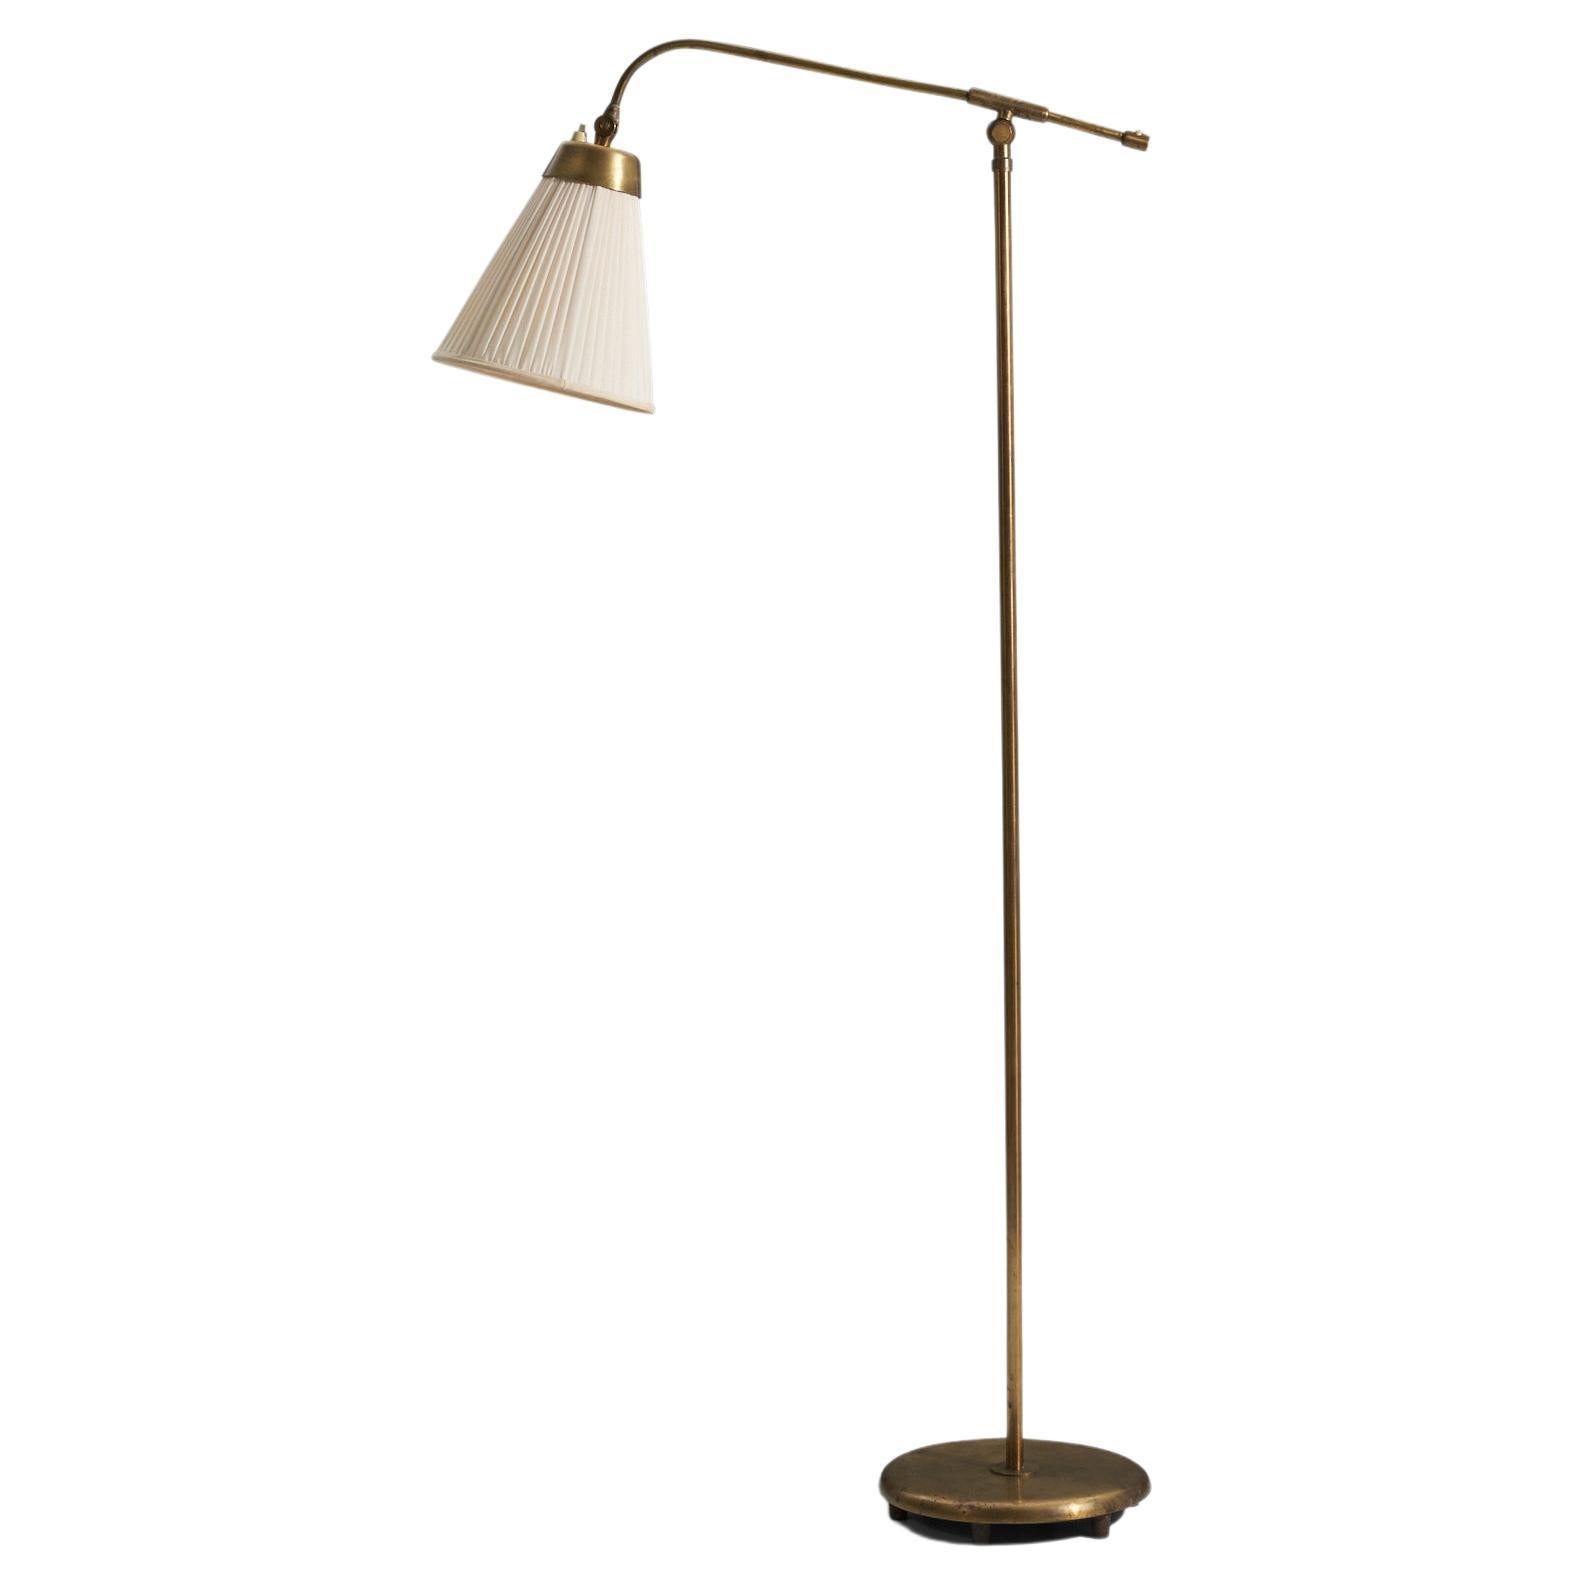 Böhlmarks, Adjustable Floor Lamp, Brass, Fabric, Sweden, 1940s